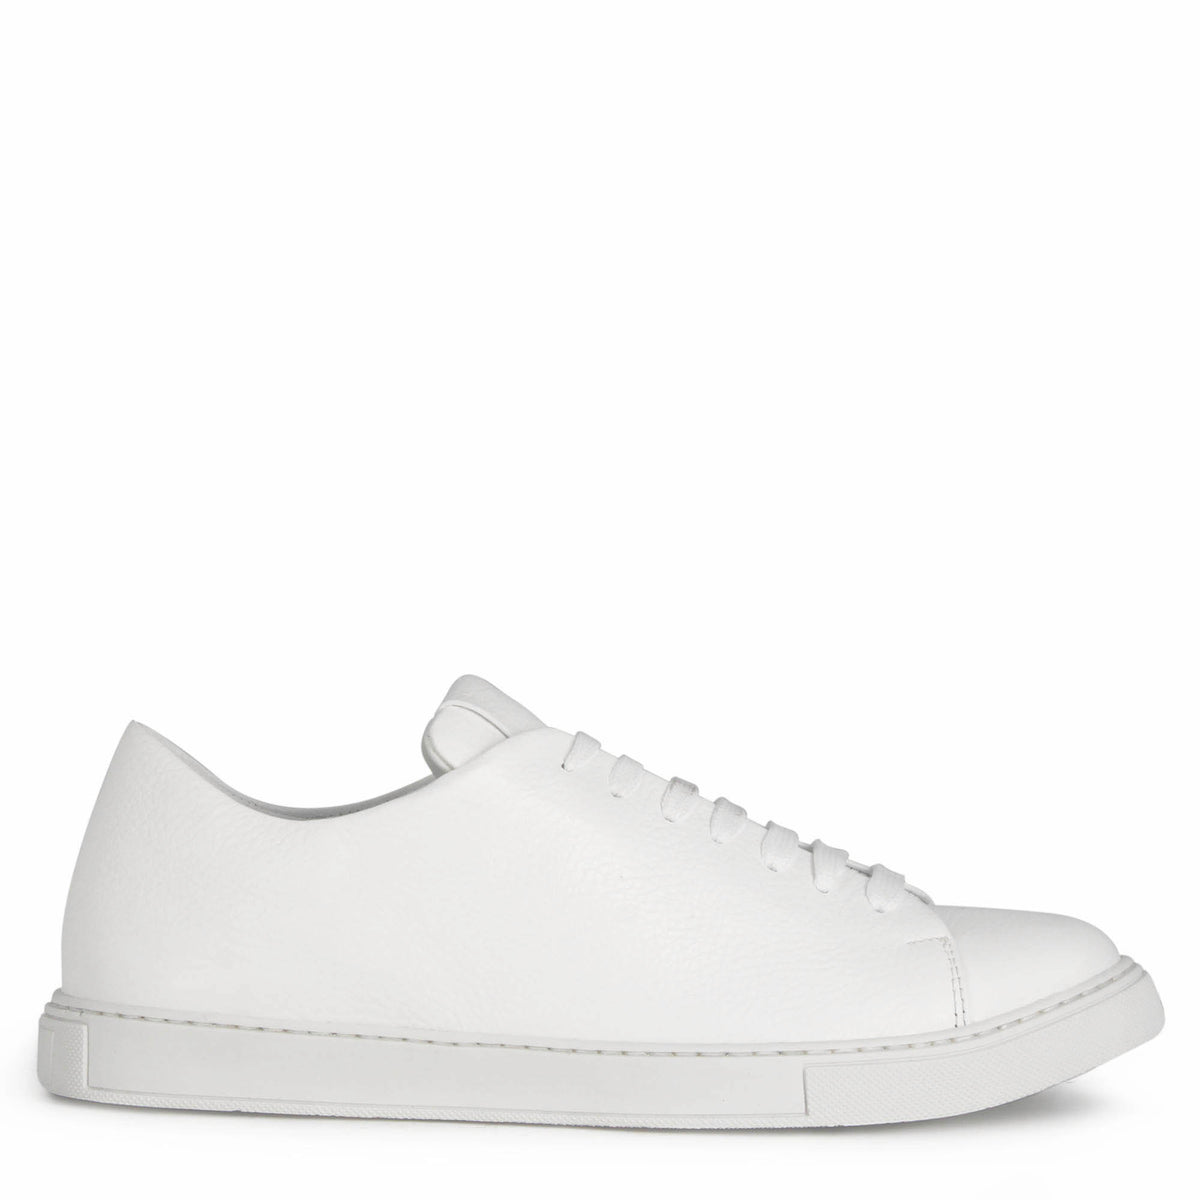 Classic men's sneaker in white leather